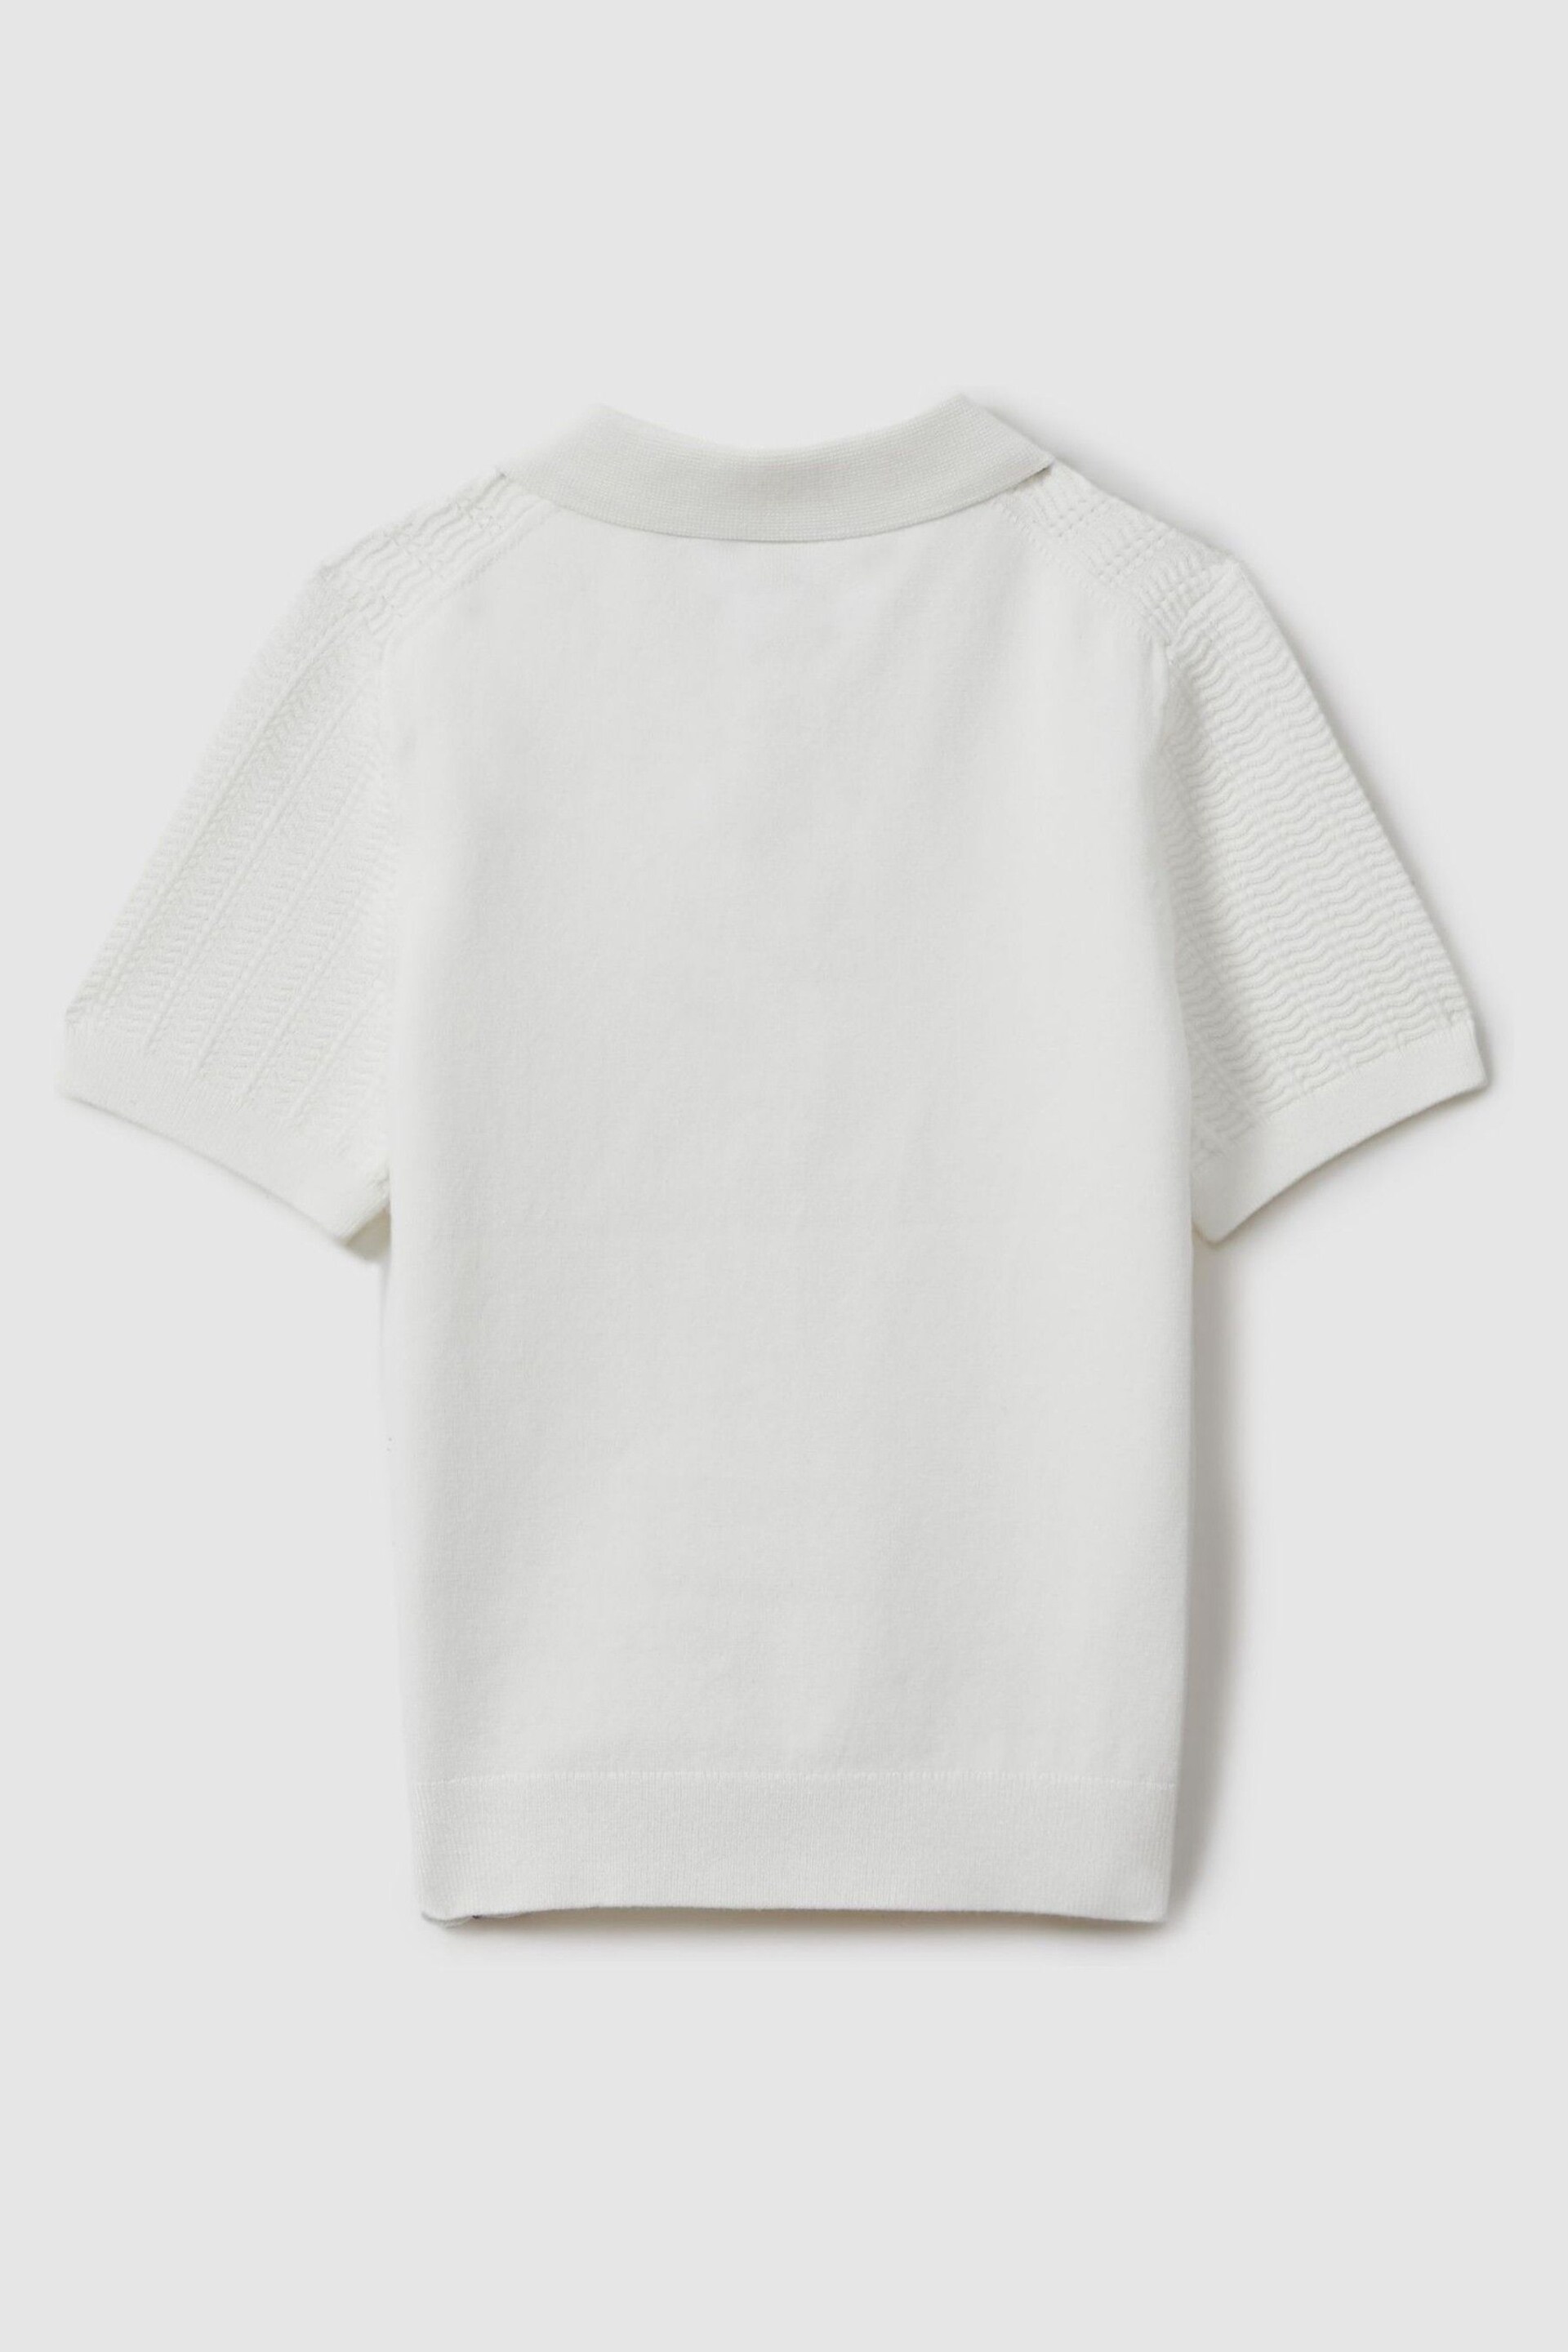 Reiss White Pascoe Teen Textured Modal Blend Polo Shirt - Image 2 of 3